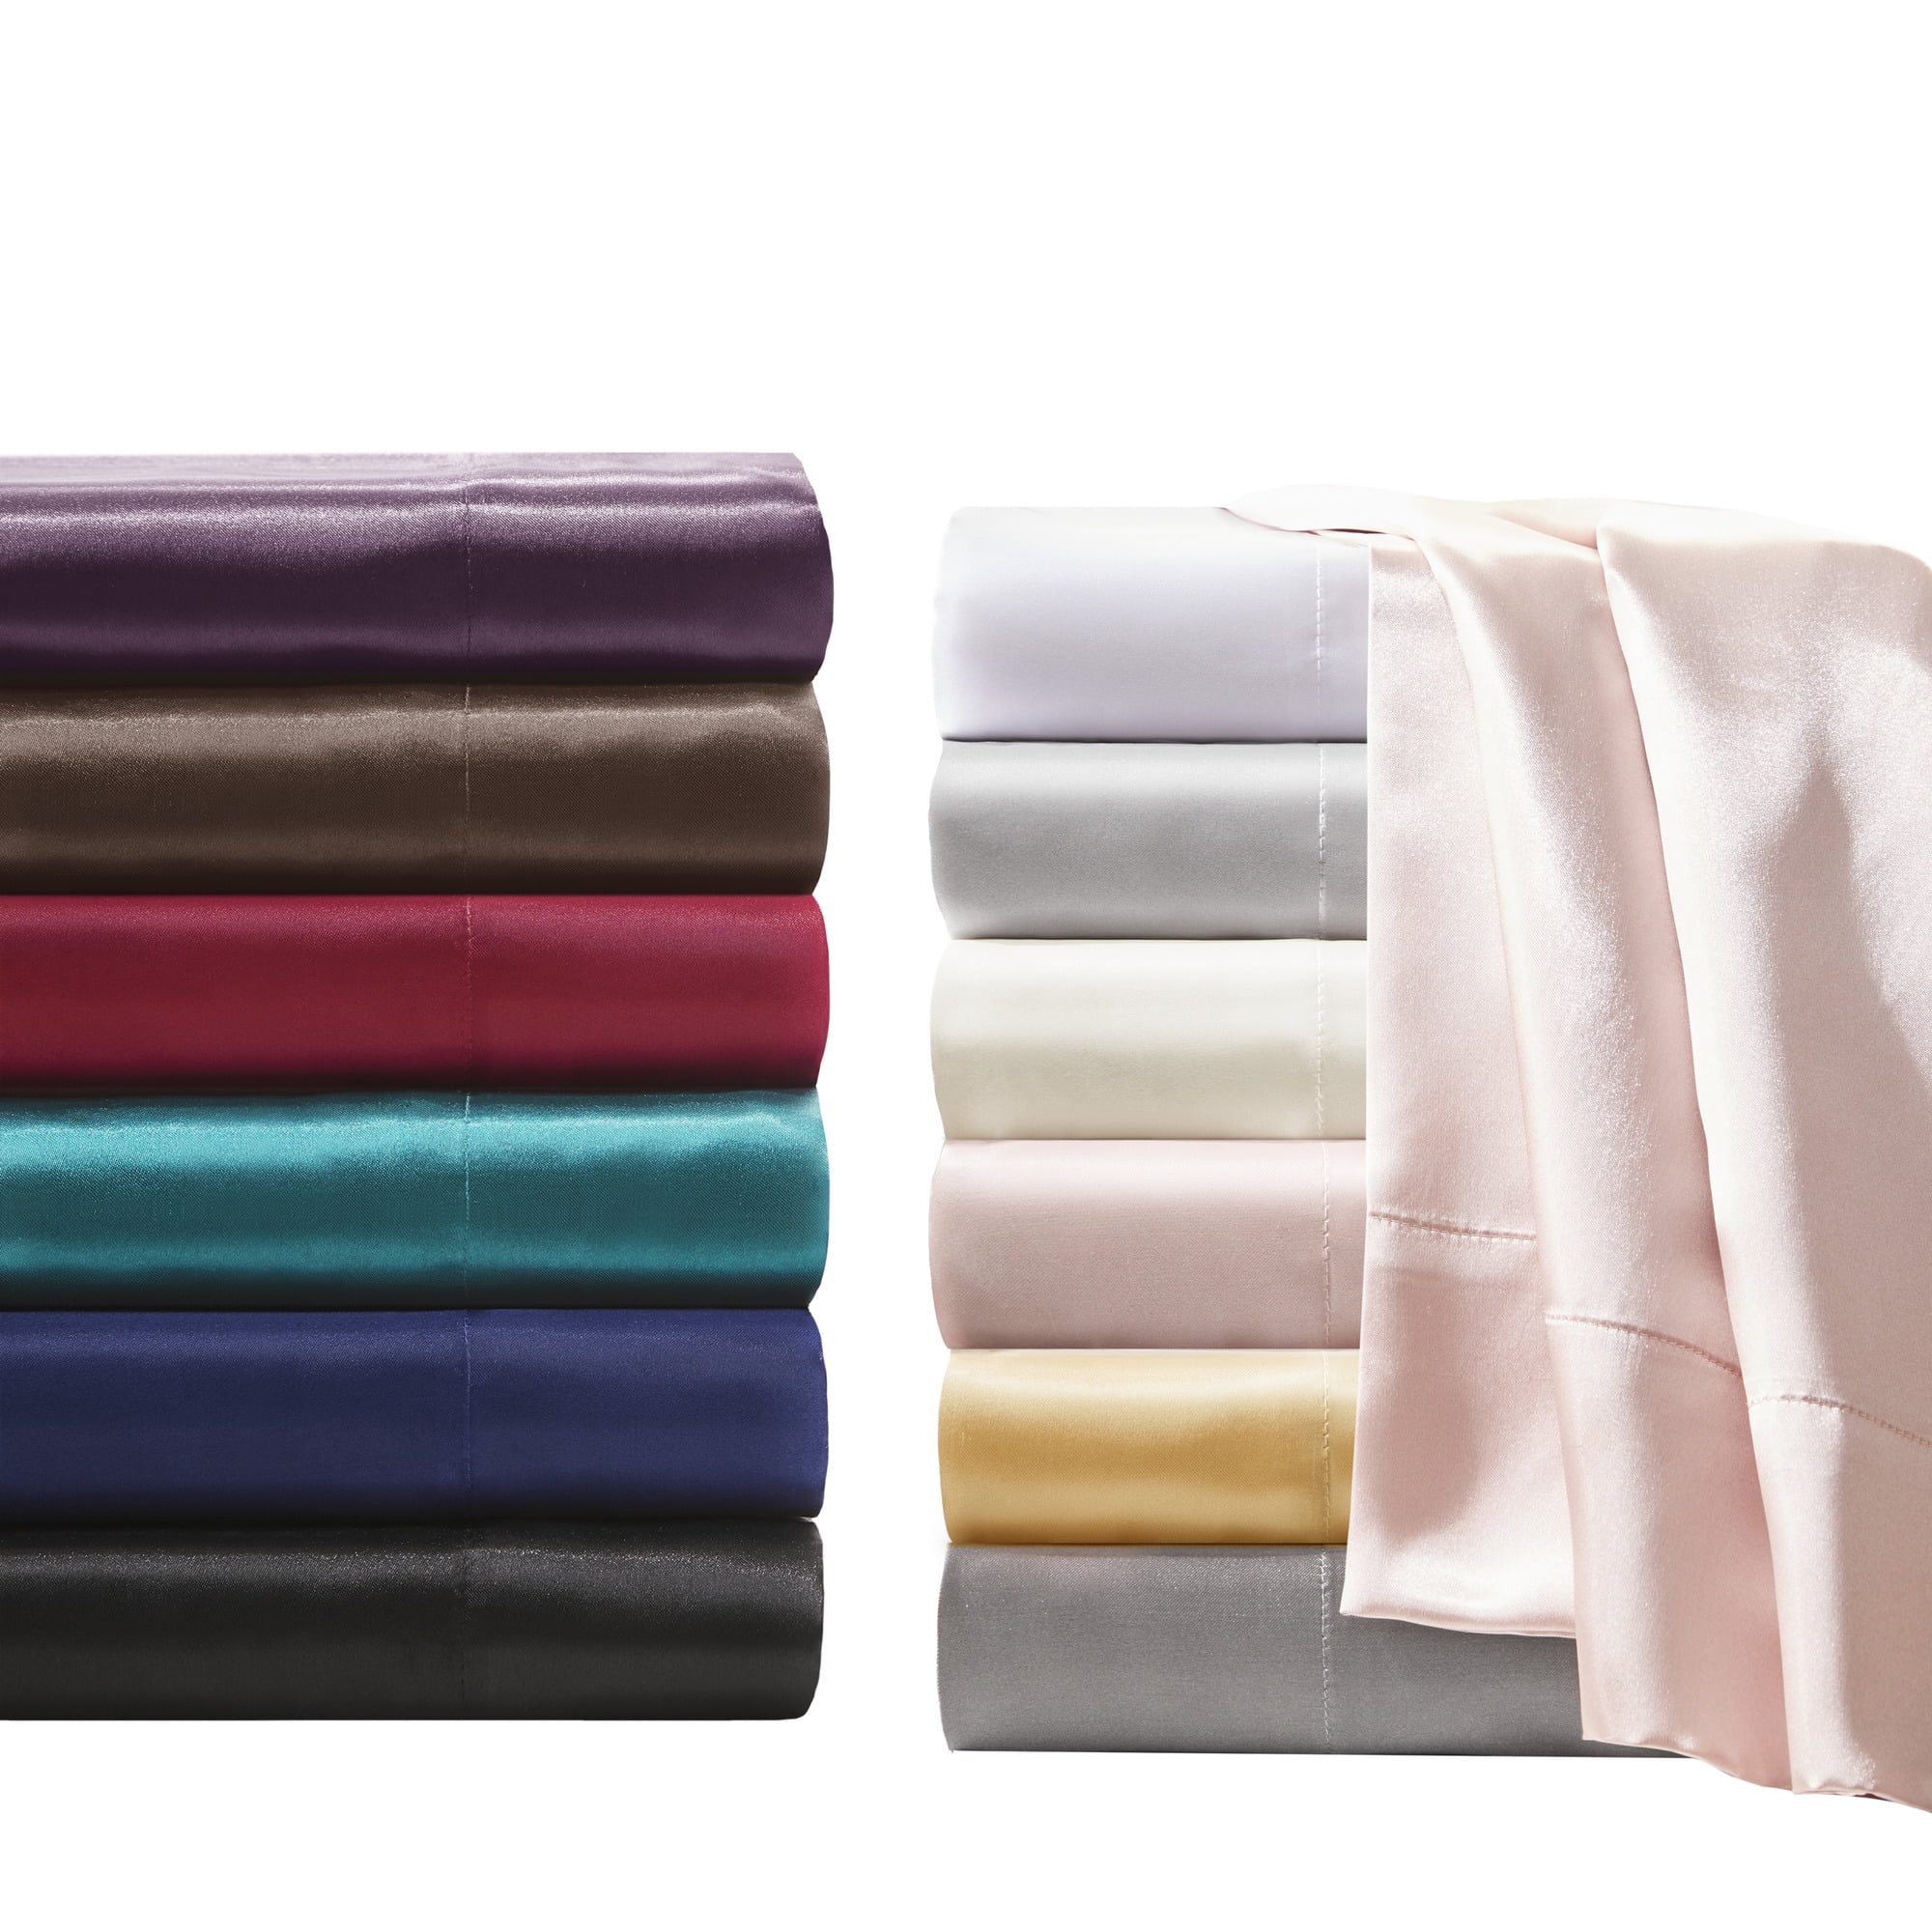 Bed Sheets – Queen Sheet Set [6-Piece, Purple] – Hotel Luxury 1800